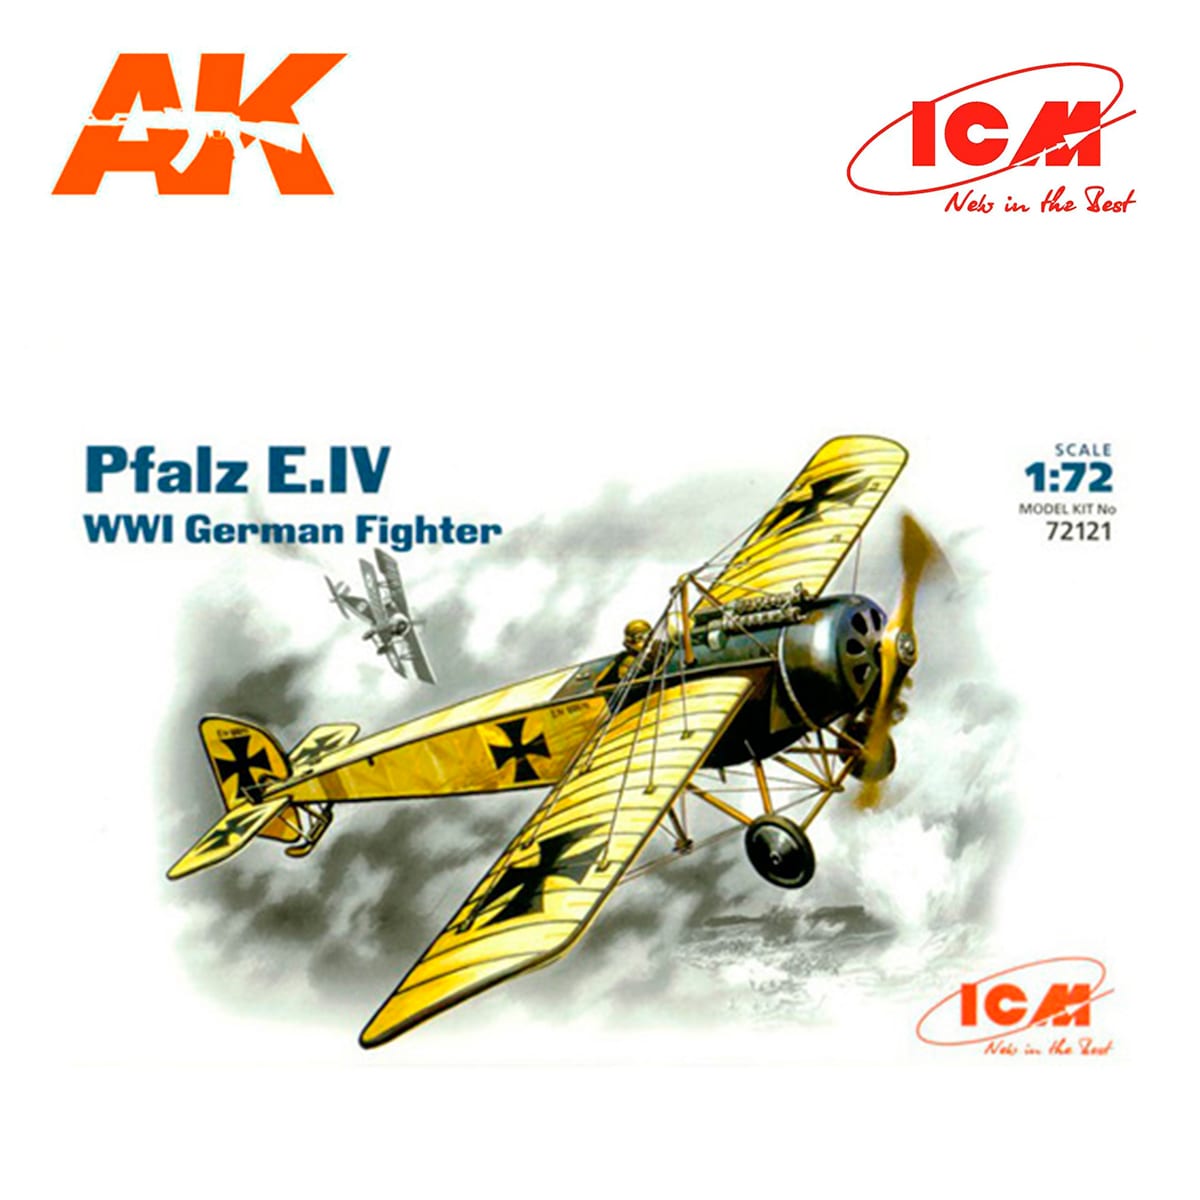 Pfalz E.IV, WWI German Fighter 1/72